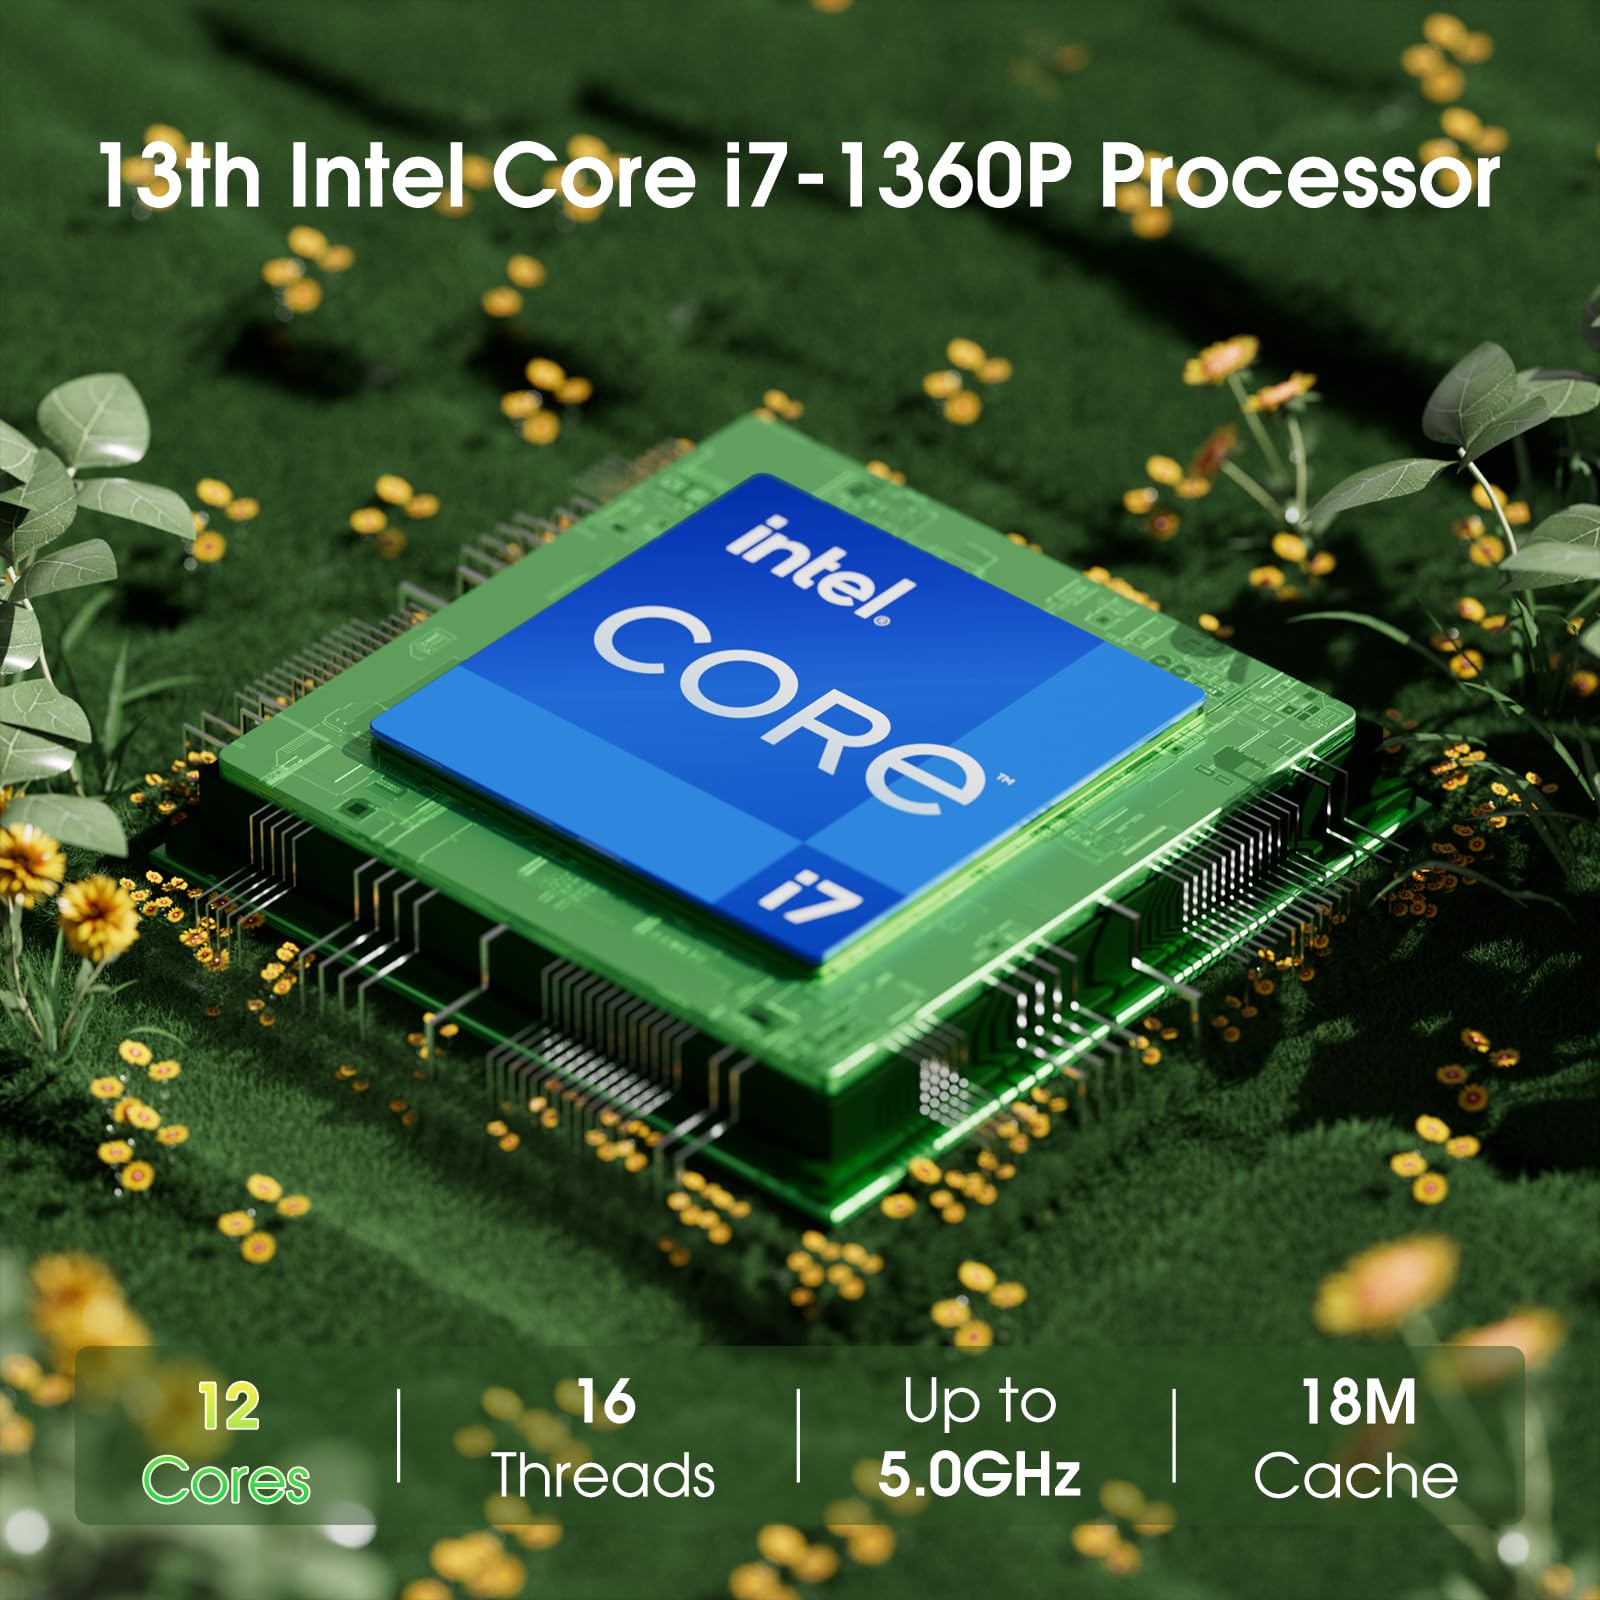 Intel NUC 13 Pro, Arena Canyon Mini Pc with 13th Gen Core i7-1360P (12C/16T & Up to 5.0GHz), 32GB DDR4 RAM & 1TB NVMe SSD, Support 8K, WiFi6E, BT5.3, 2 x Thunderbolt 4, Windows 11 Pro, 18M Cache